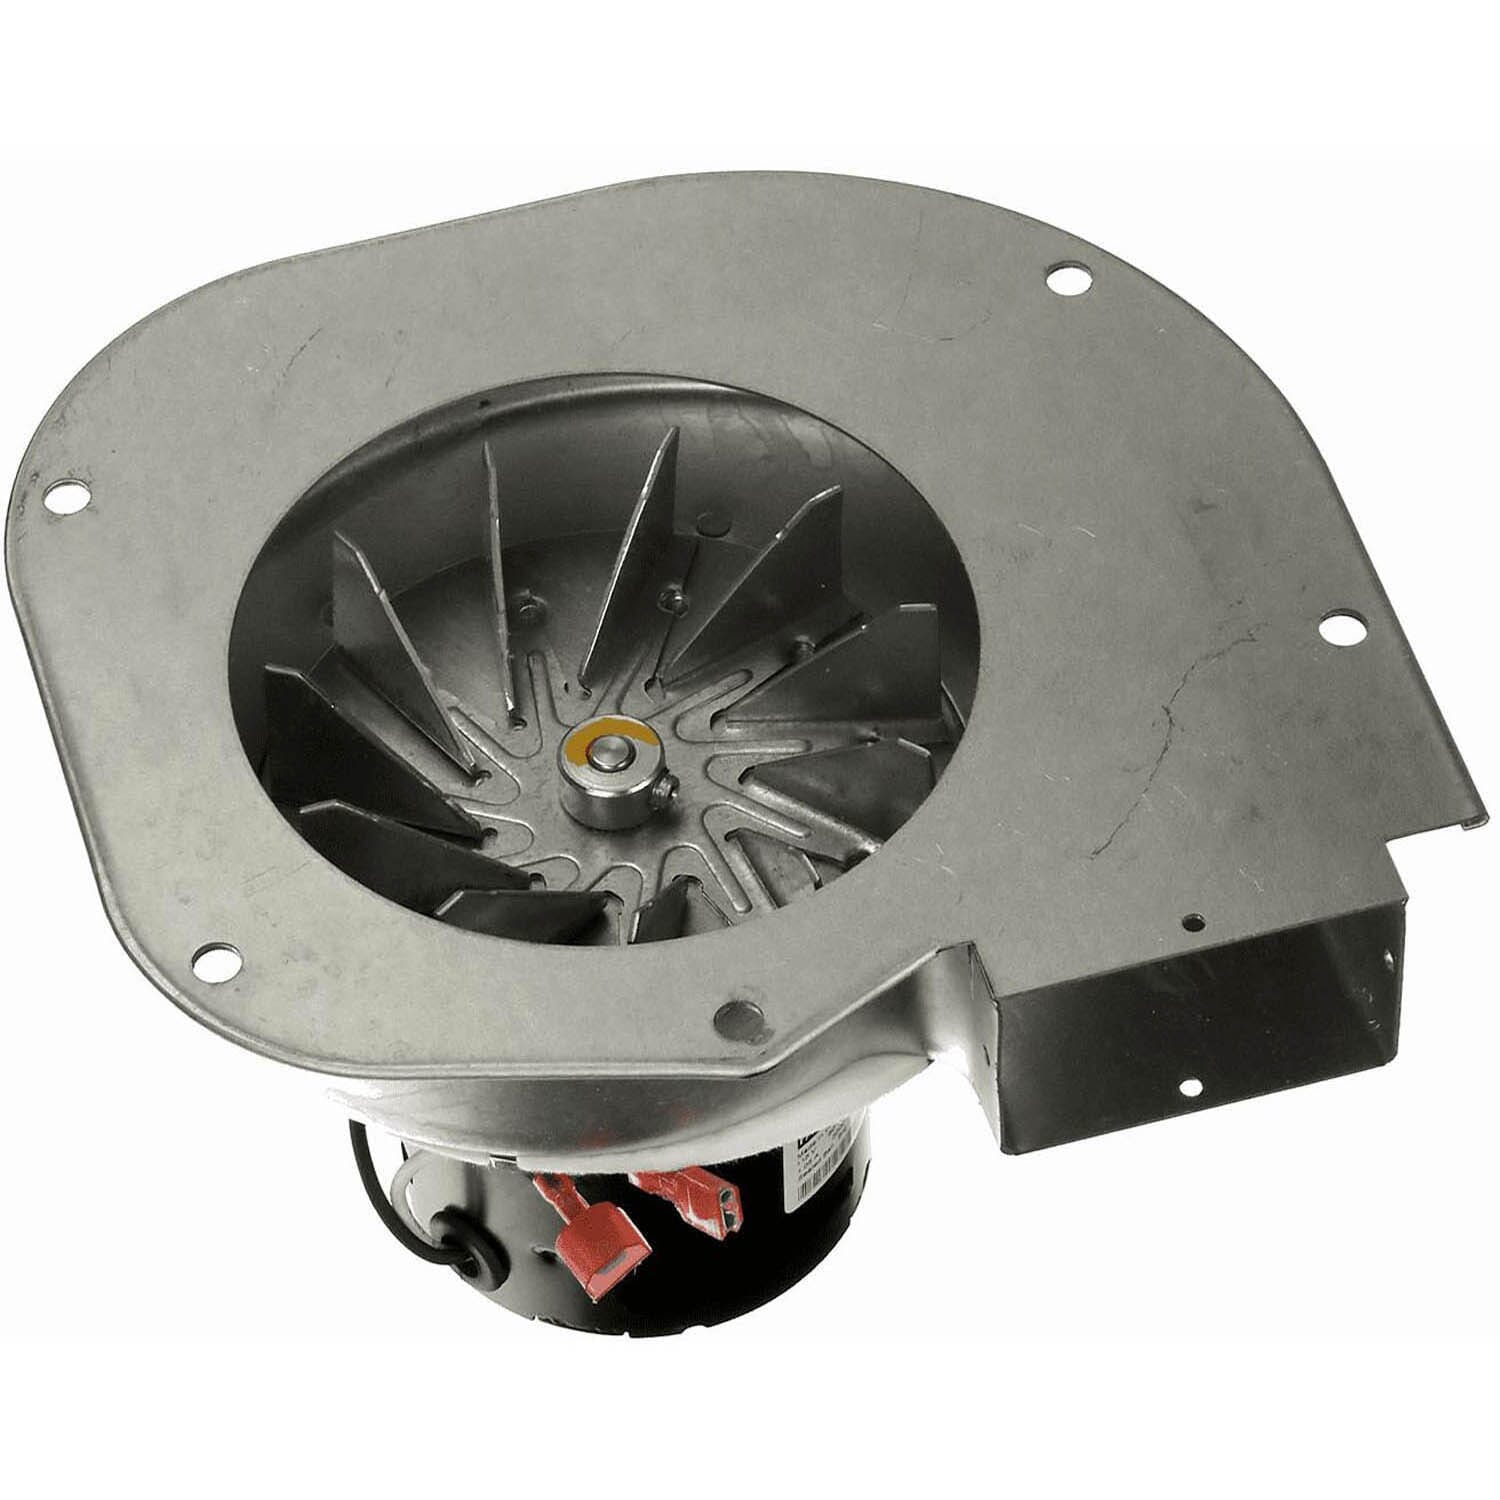 St. Croix Stove Combustion Blower Exhaust Fan Motor, 80P31093-R, 80P20001-R